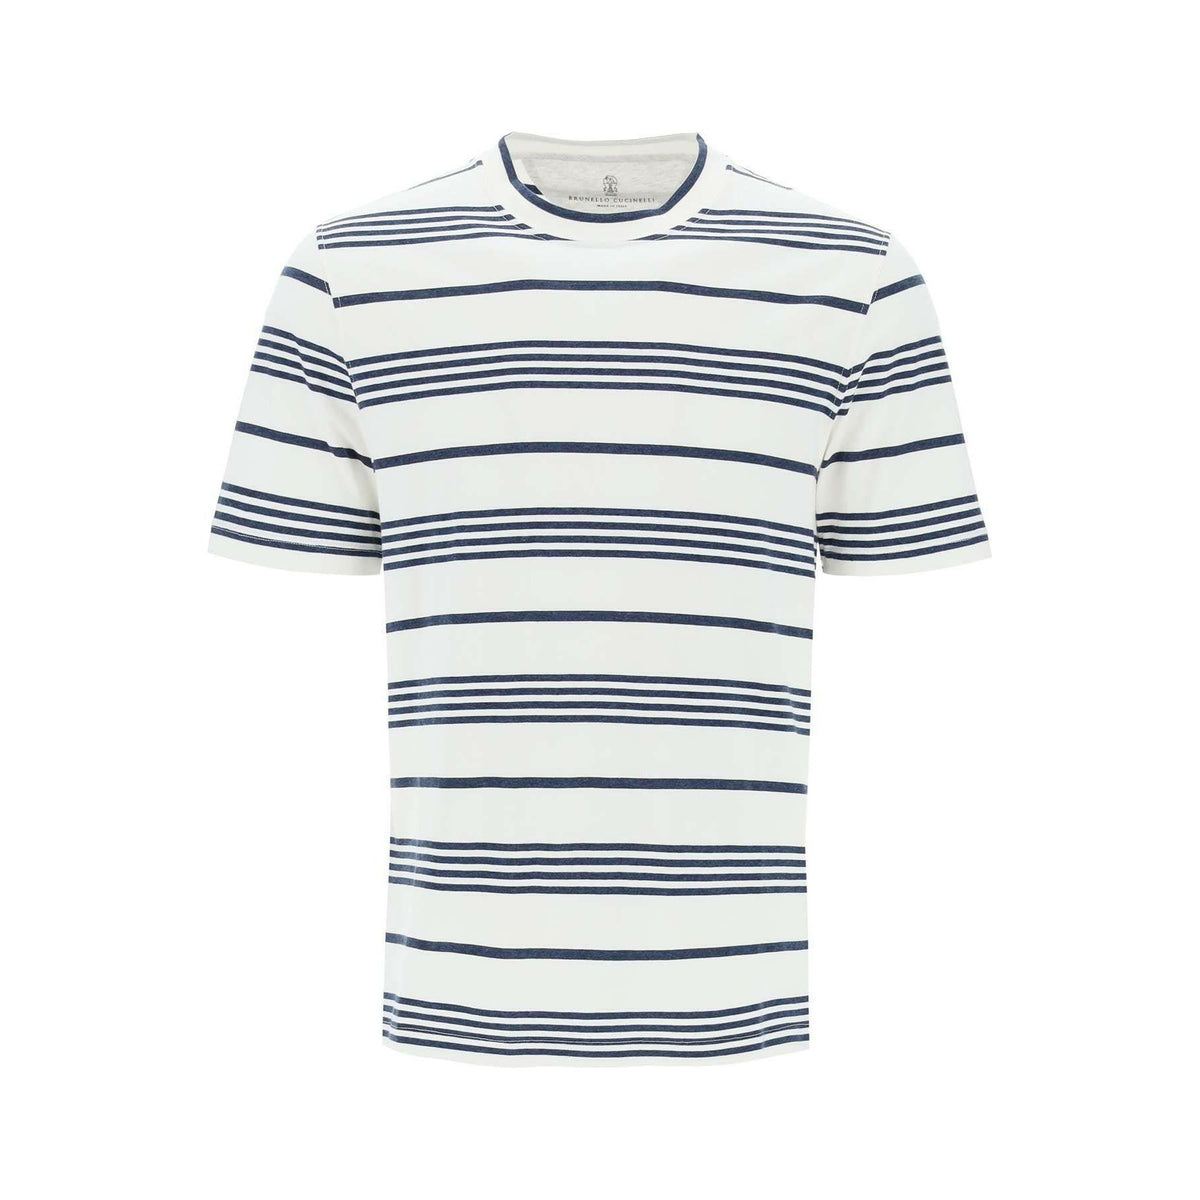 Off-White and Navy Striped Cotton Jersey T-Shirt BRUNELLO CUCINELLI JOHN JULIA.